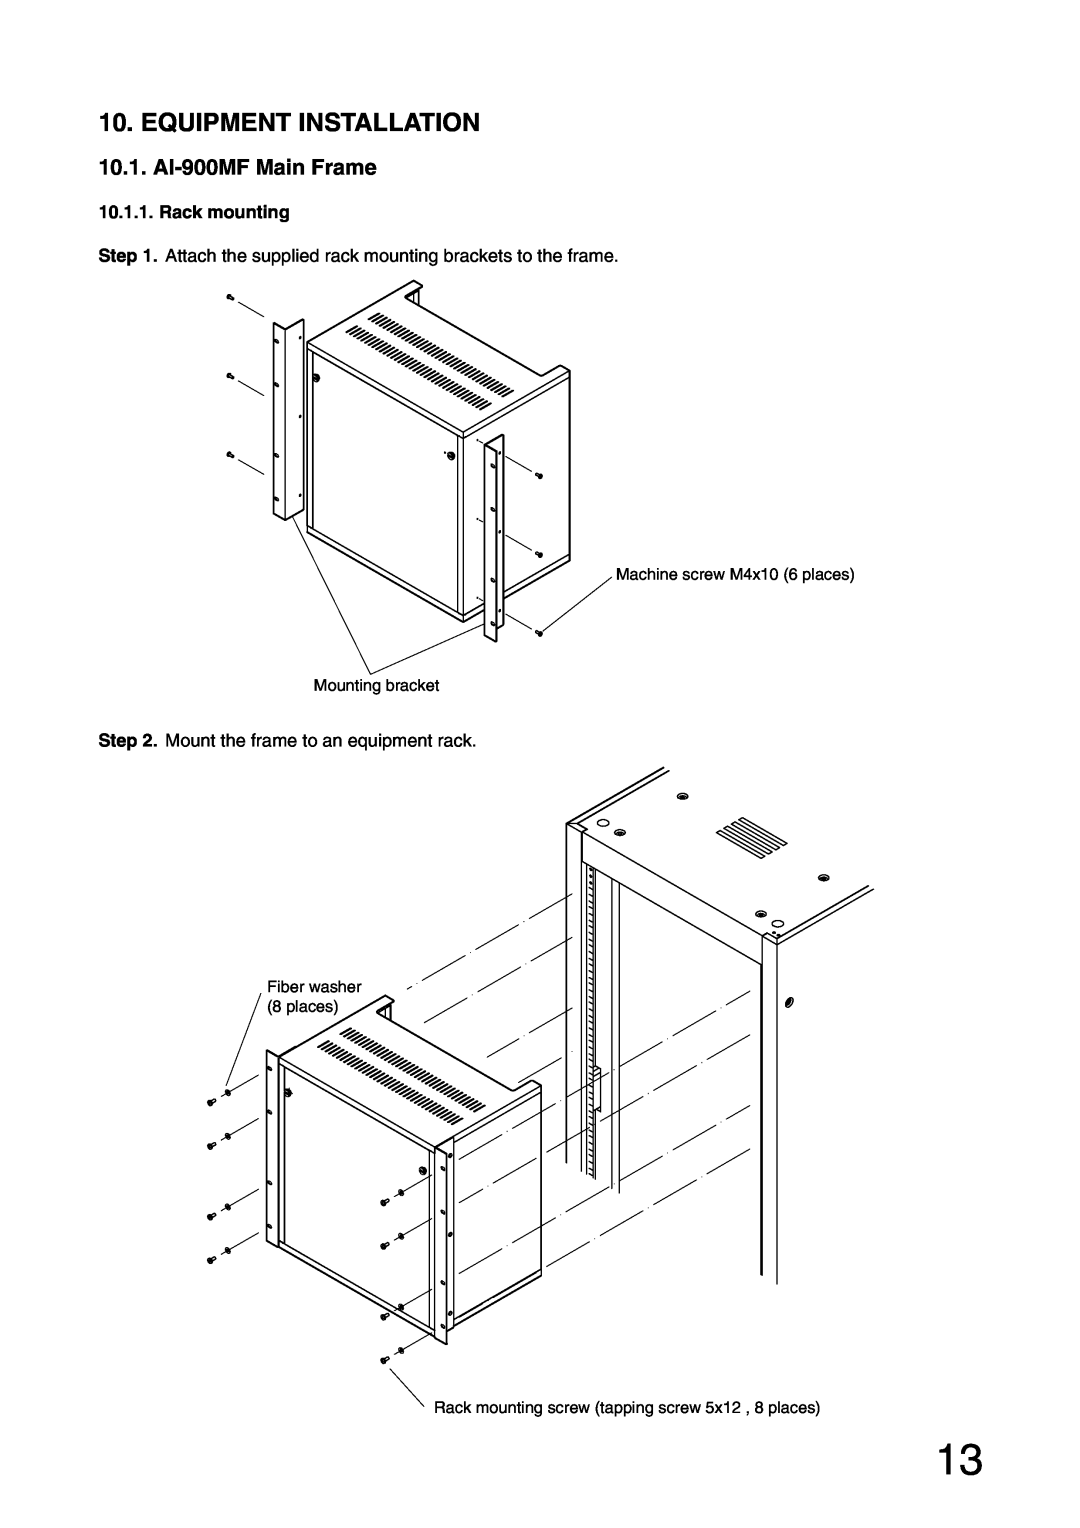 Aiphone installation manual Equipment Installation, AI-900MFMain Frame, Rack mounting 